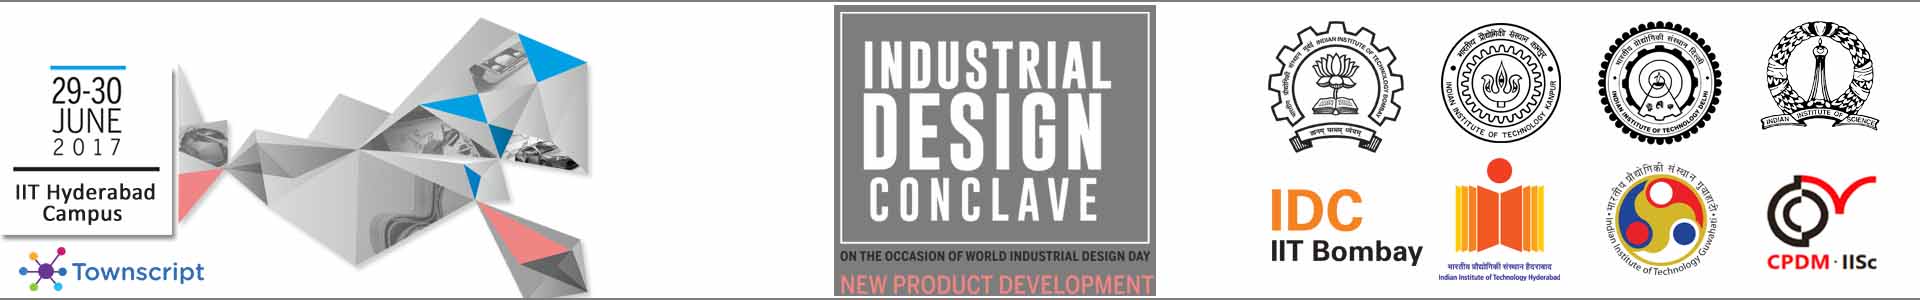 industrial-design-conclave